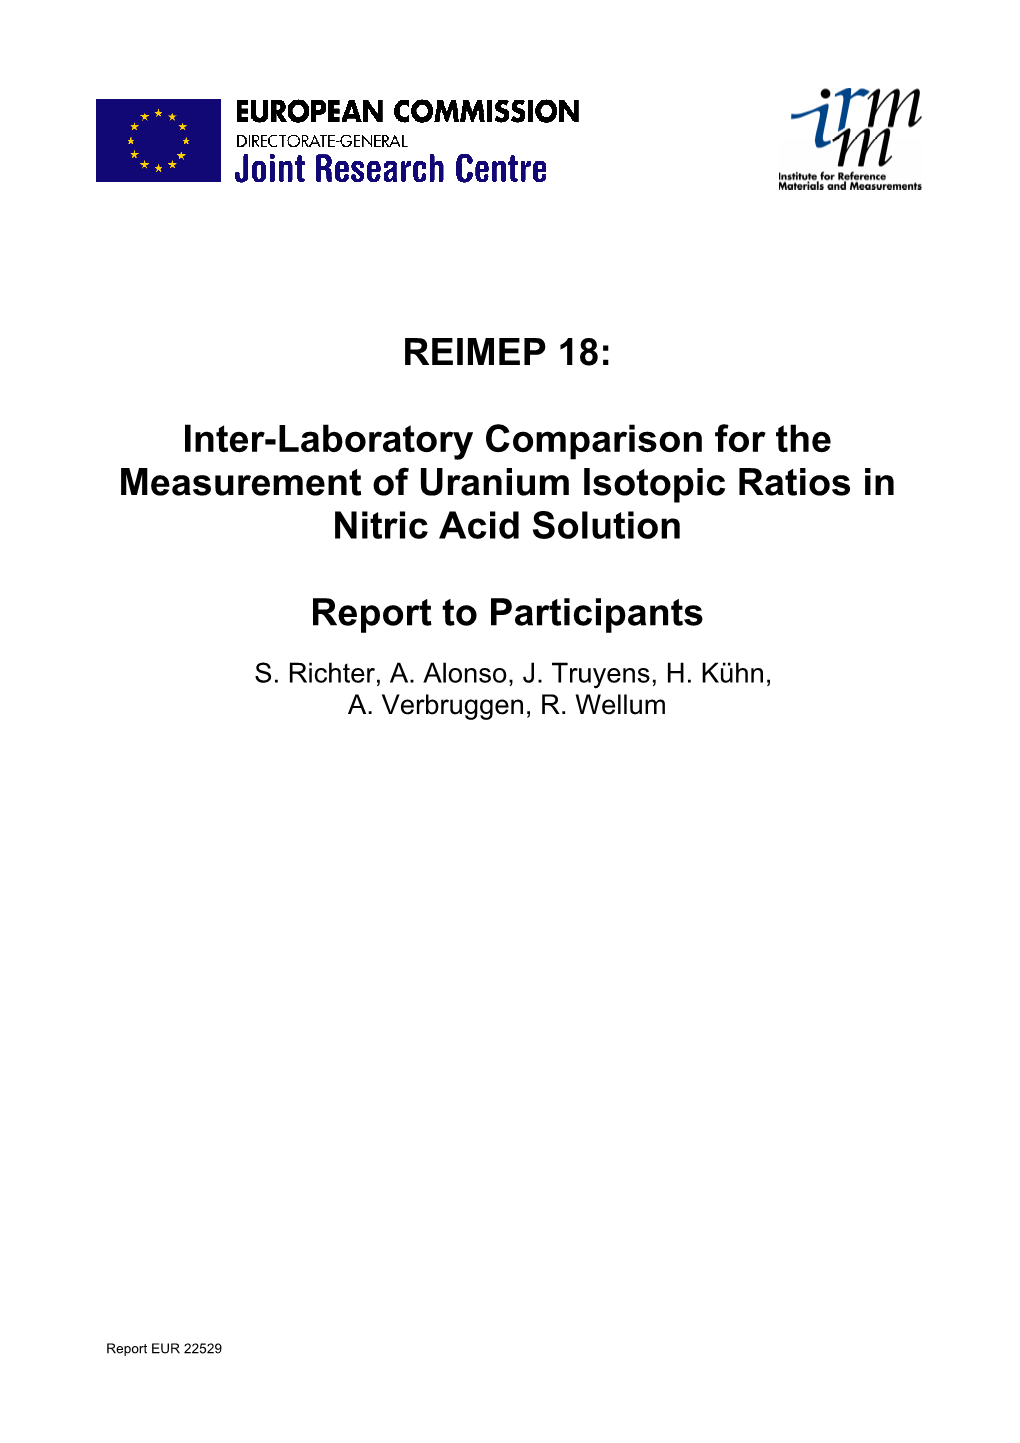 Inter-Laboratory Comparisonfor the Measurement of Uranium Isotopic